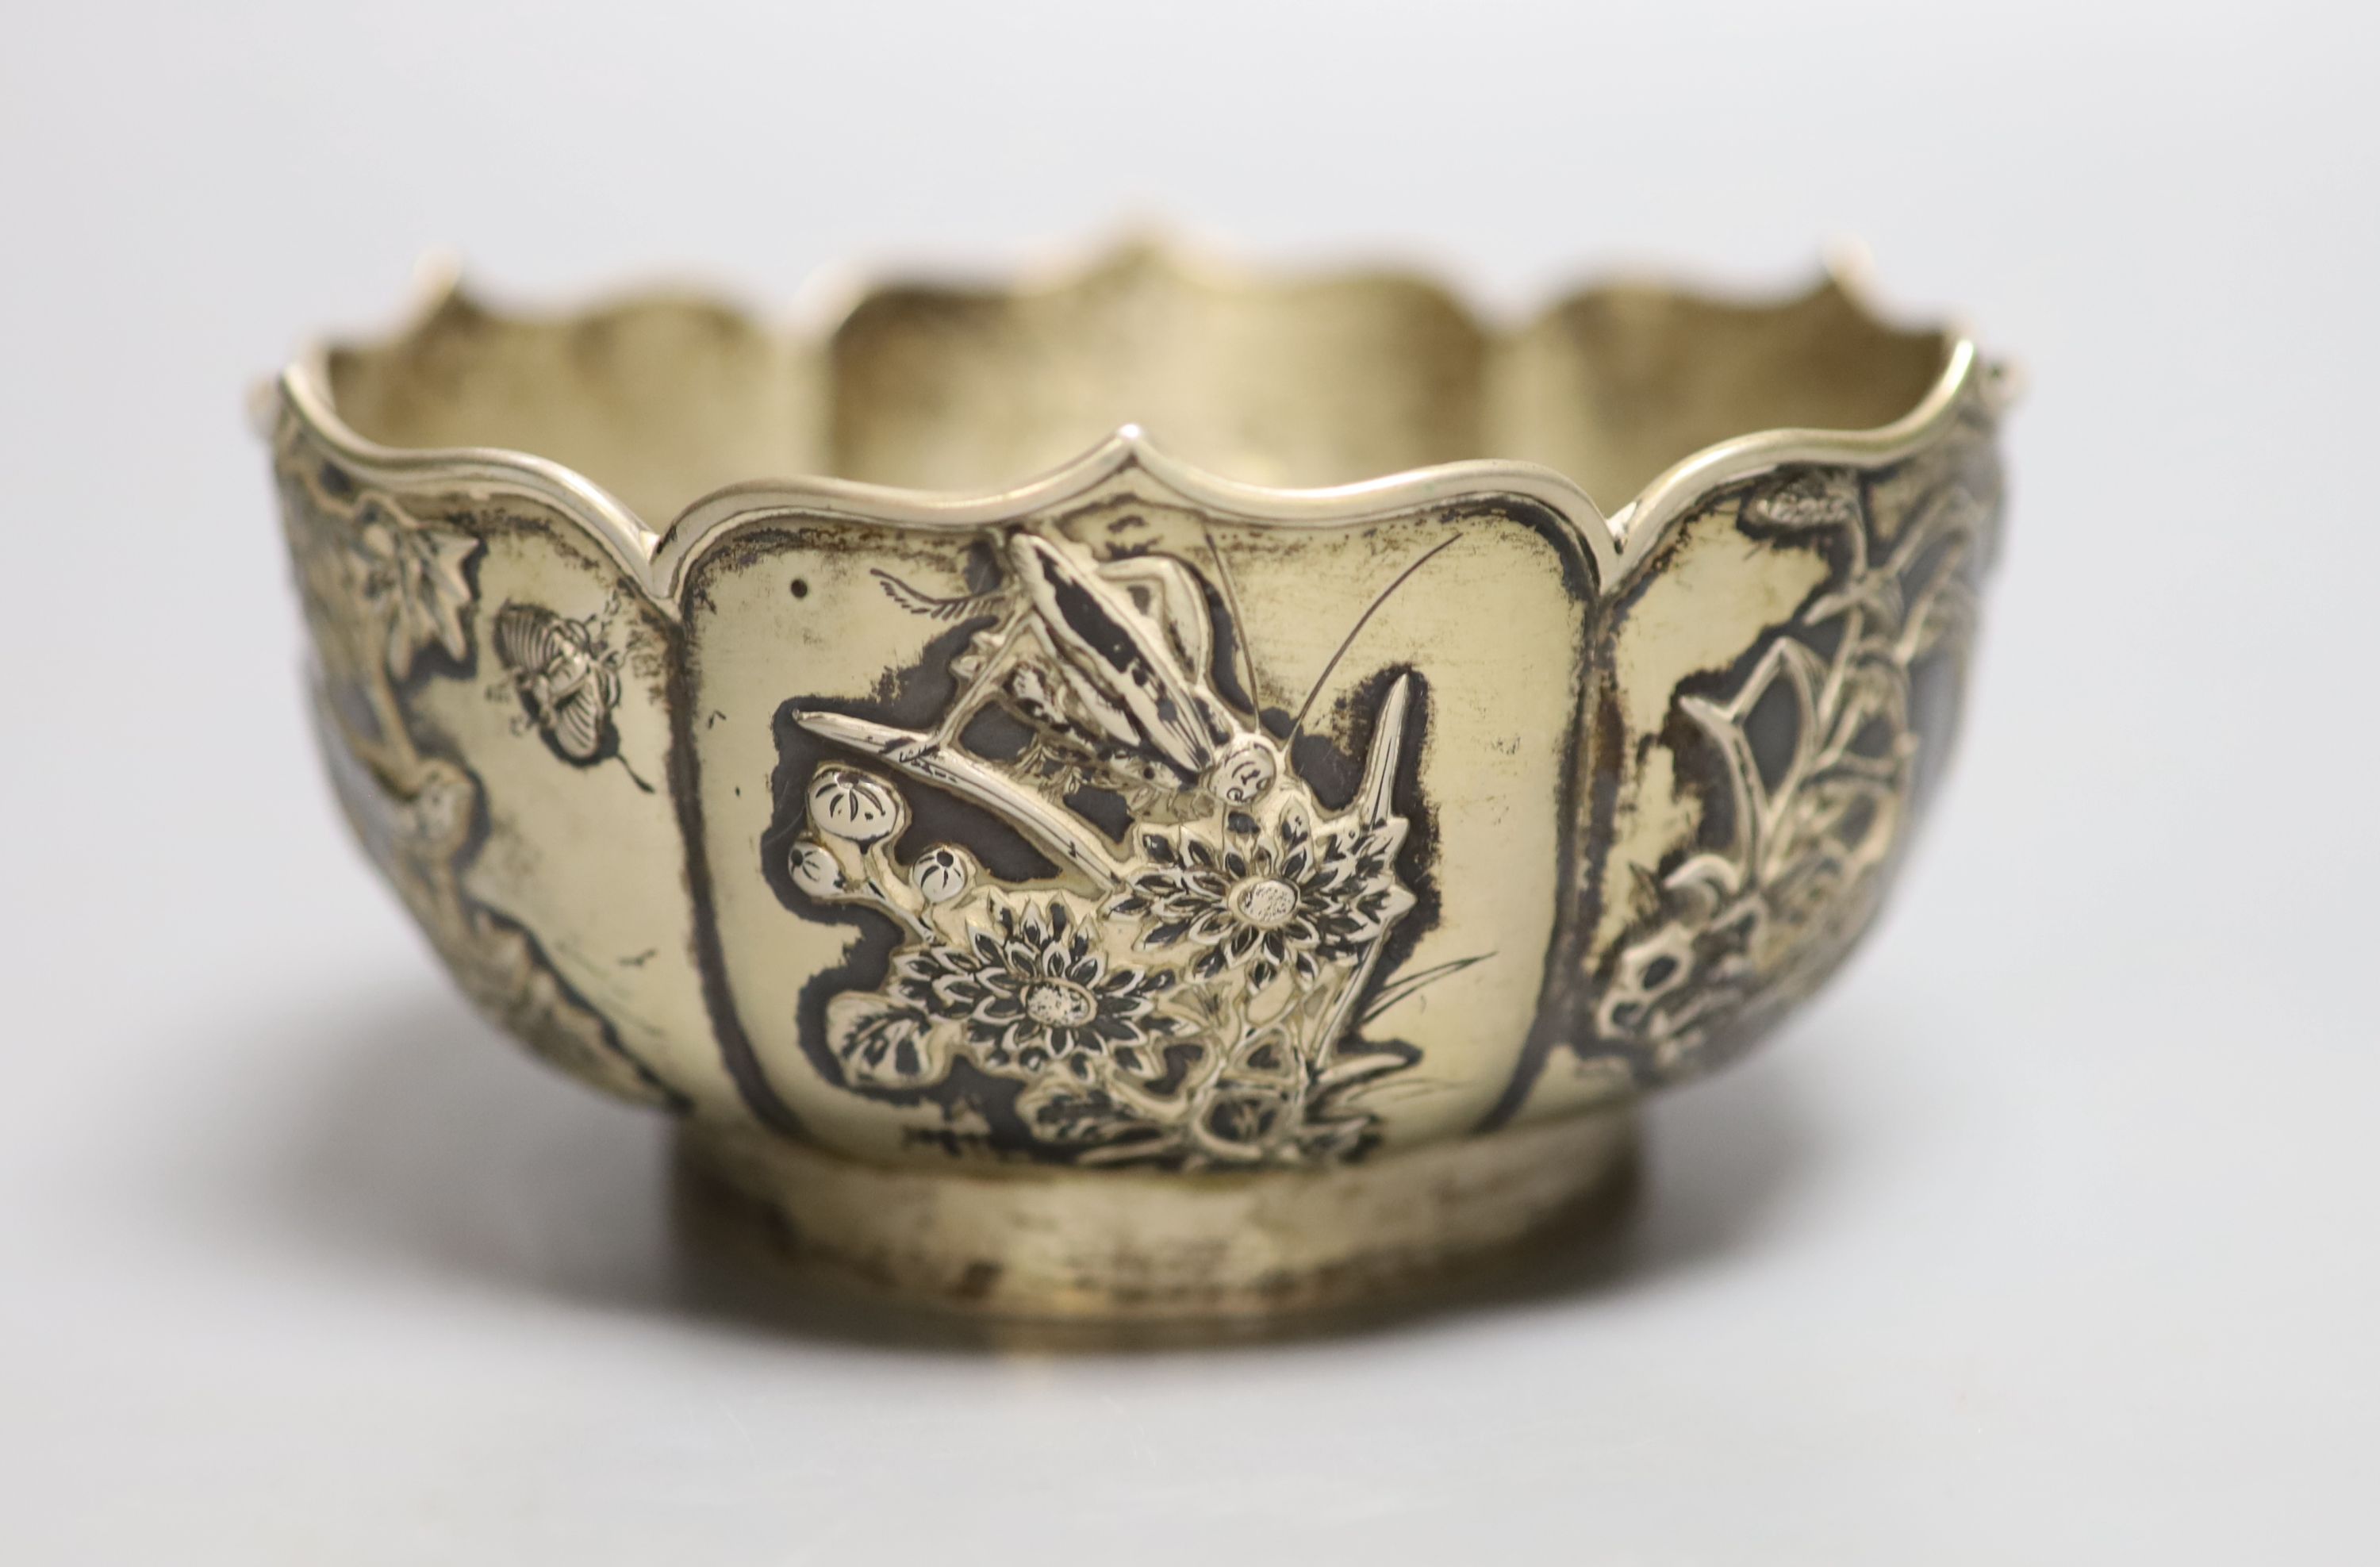 An early 20th century Chinese Export white metal bowl, by Wang Hing, Hong Kong, 13.5cm, 6oz.